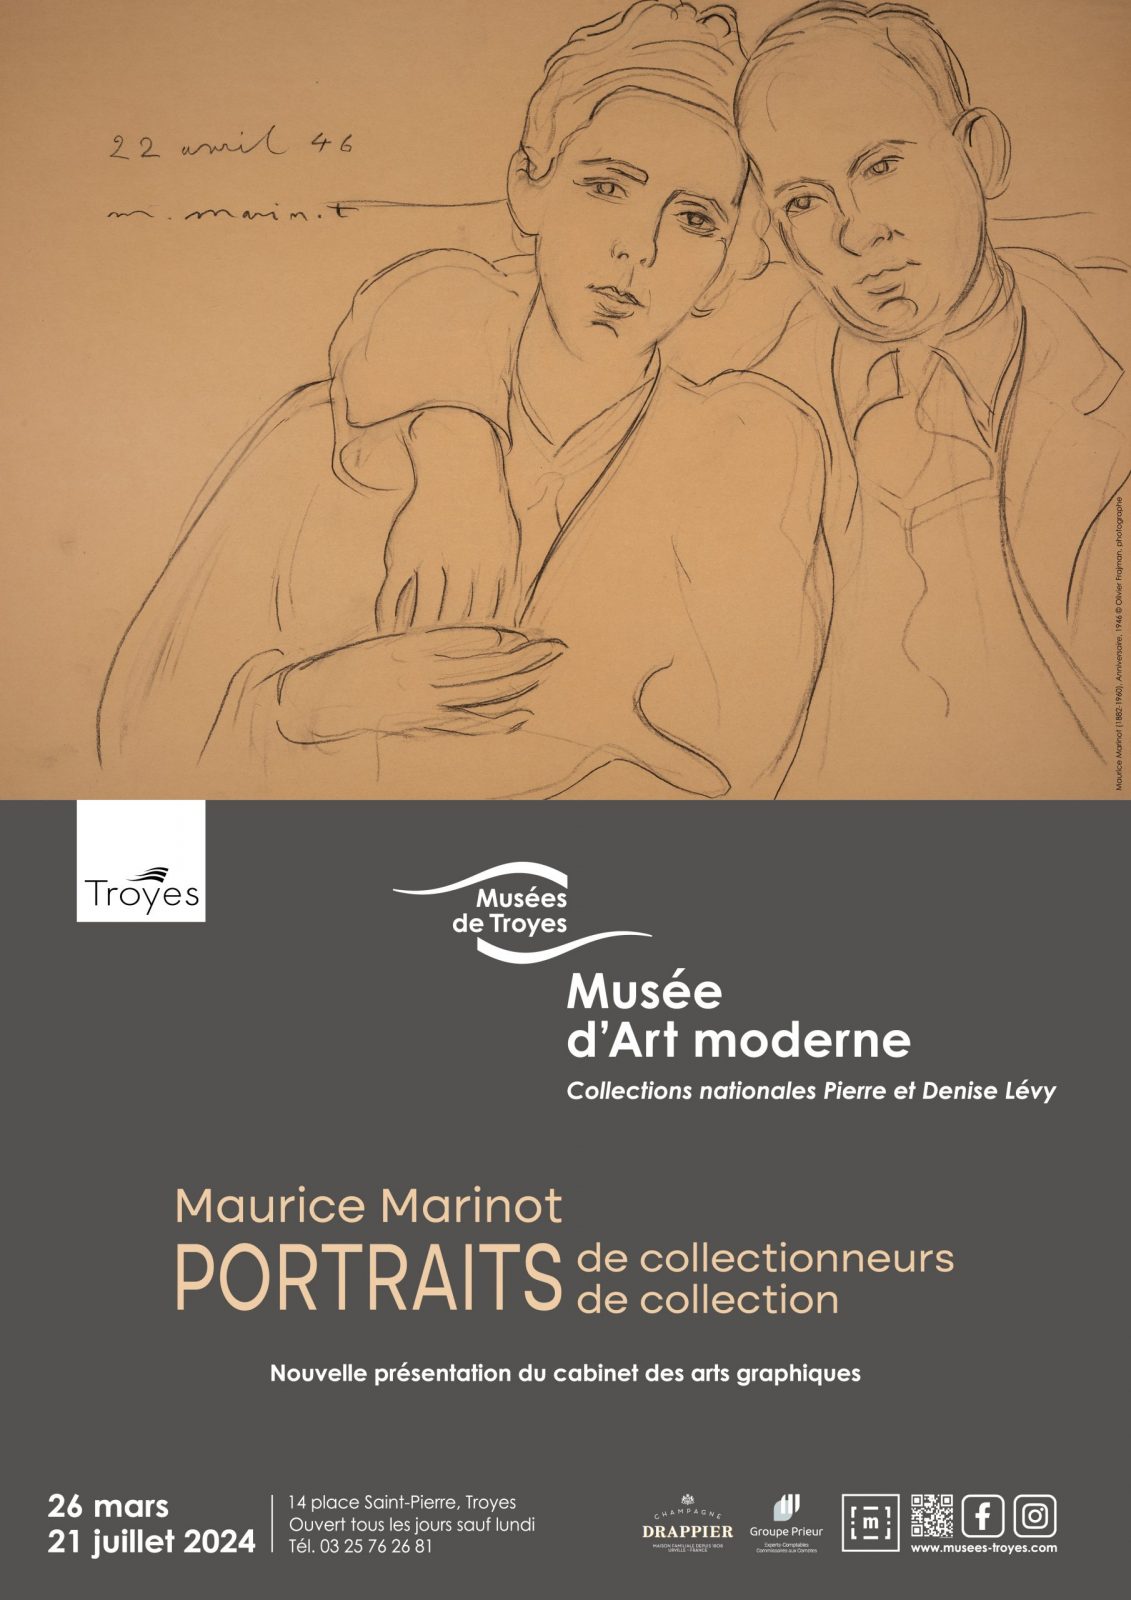 MAURICE MARINOT, PORTRAITS DE COLLECTIONNEURS, PORTRAITS DE COLLECTION Du 26 mars au 21 juil 2024